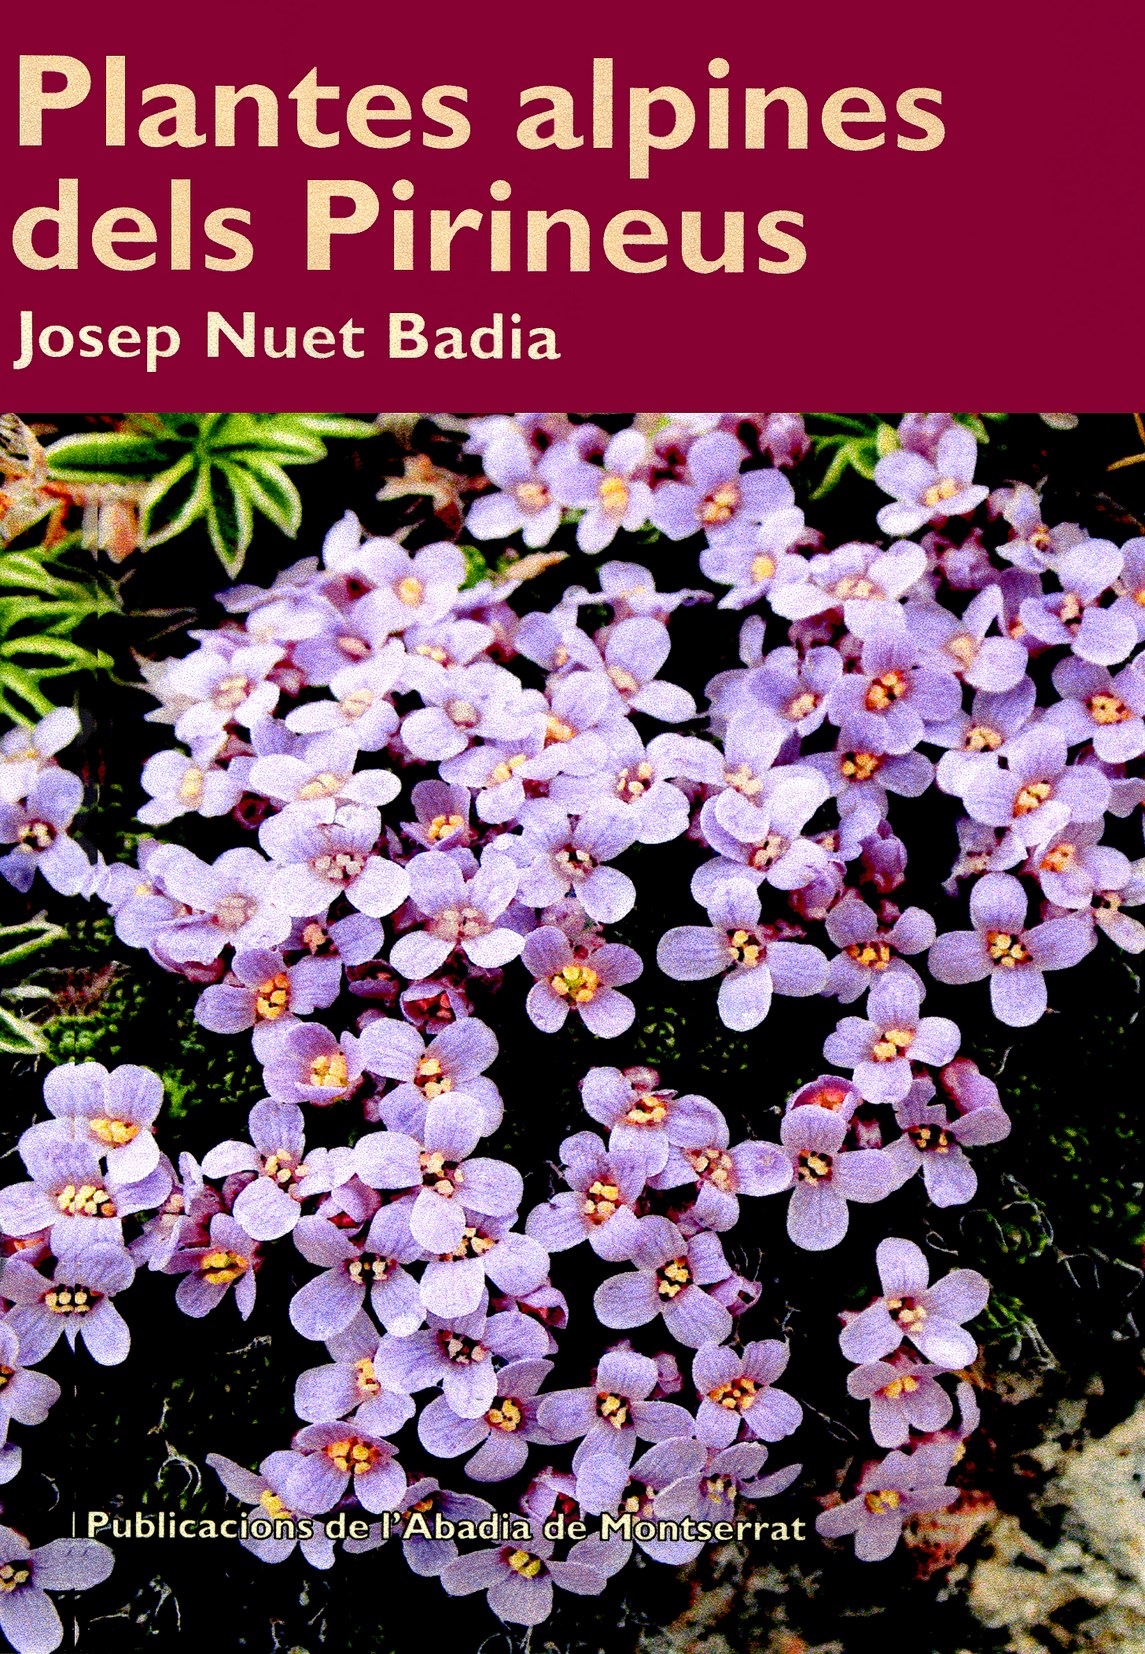 Josep Nuet i Badia